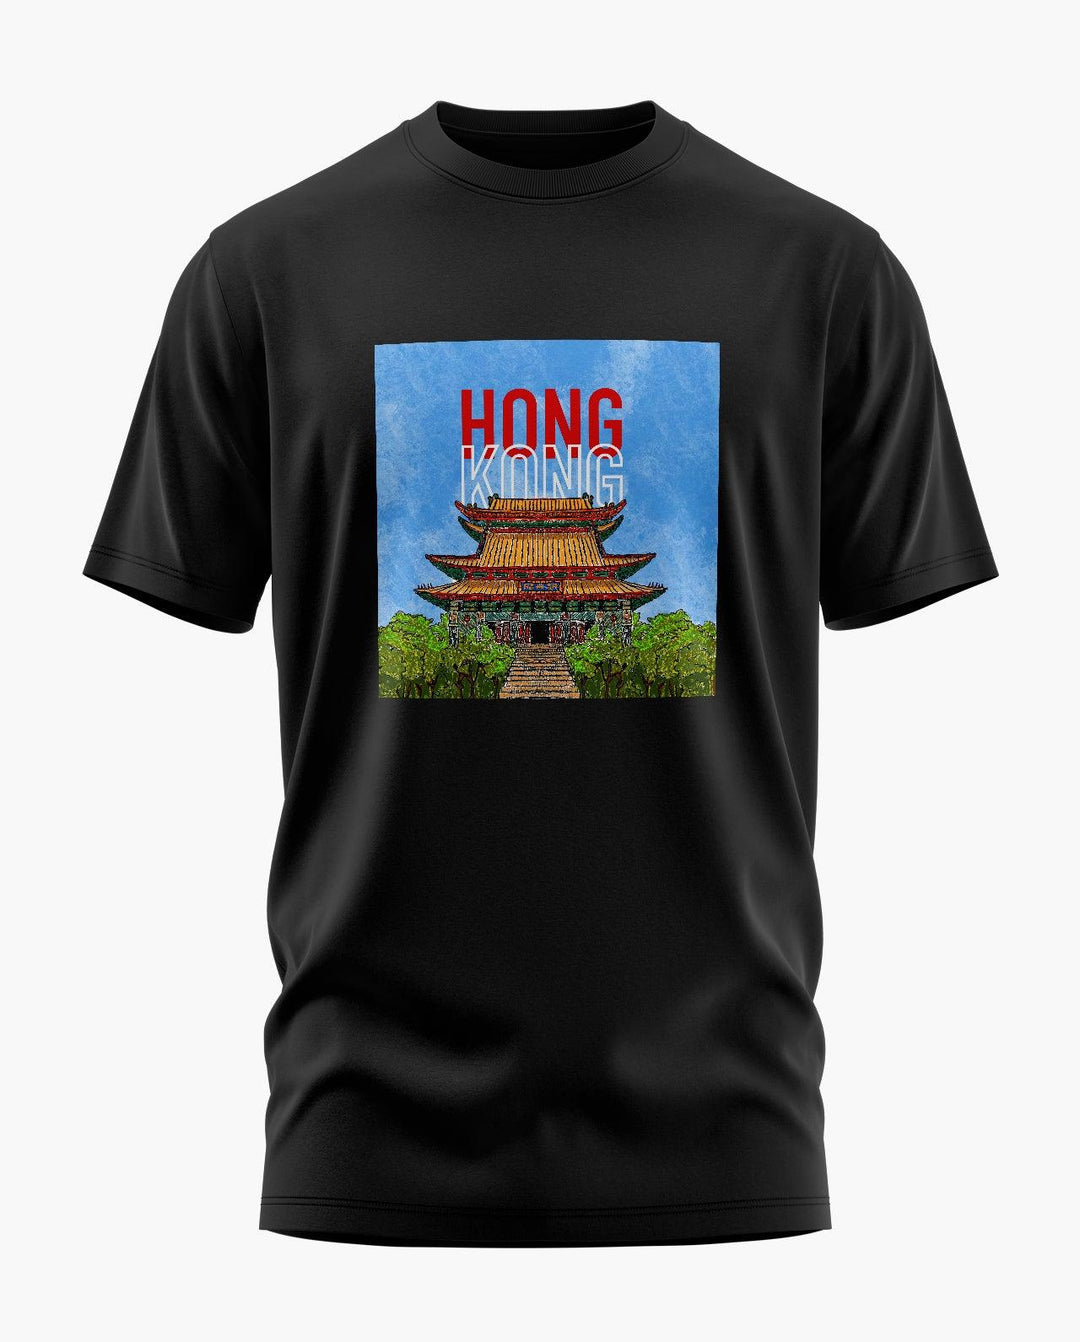 Poh Lin Monastry Hong Kong T-Shirt - Aero Armour